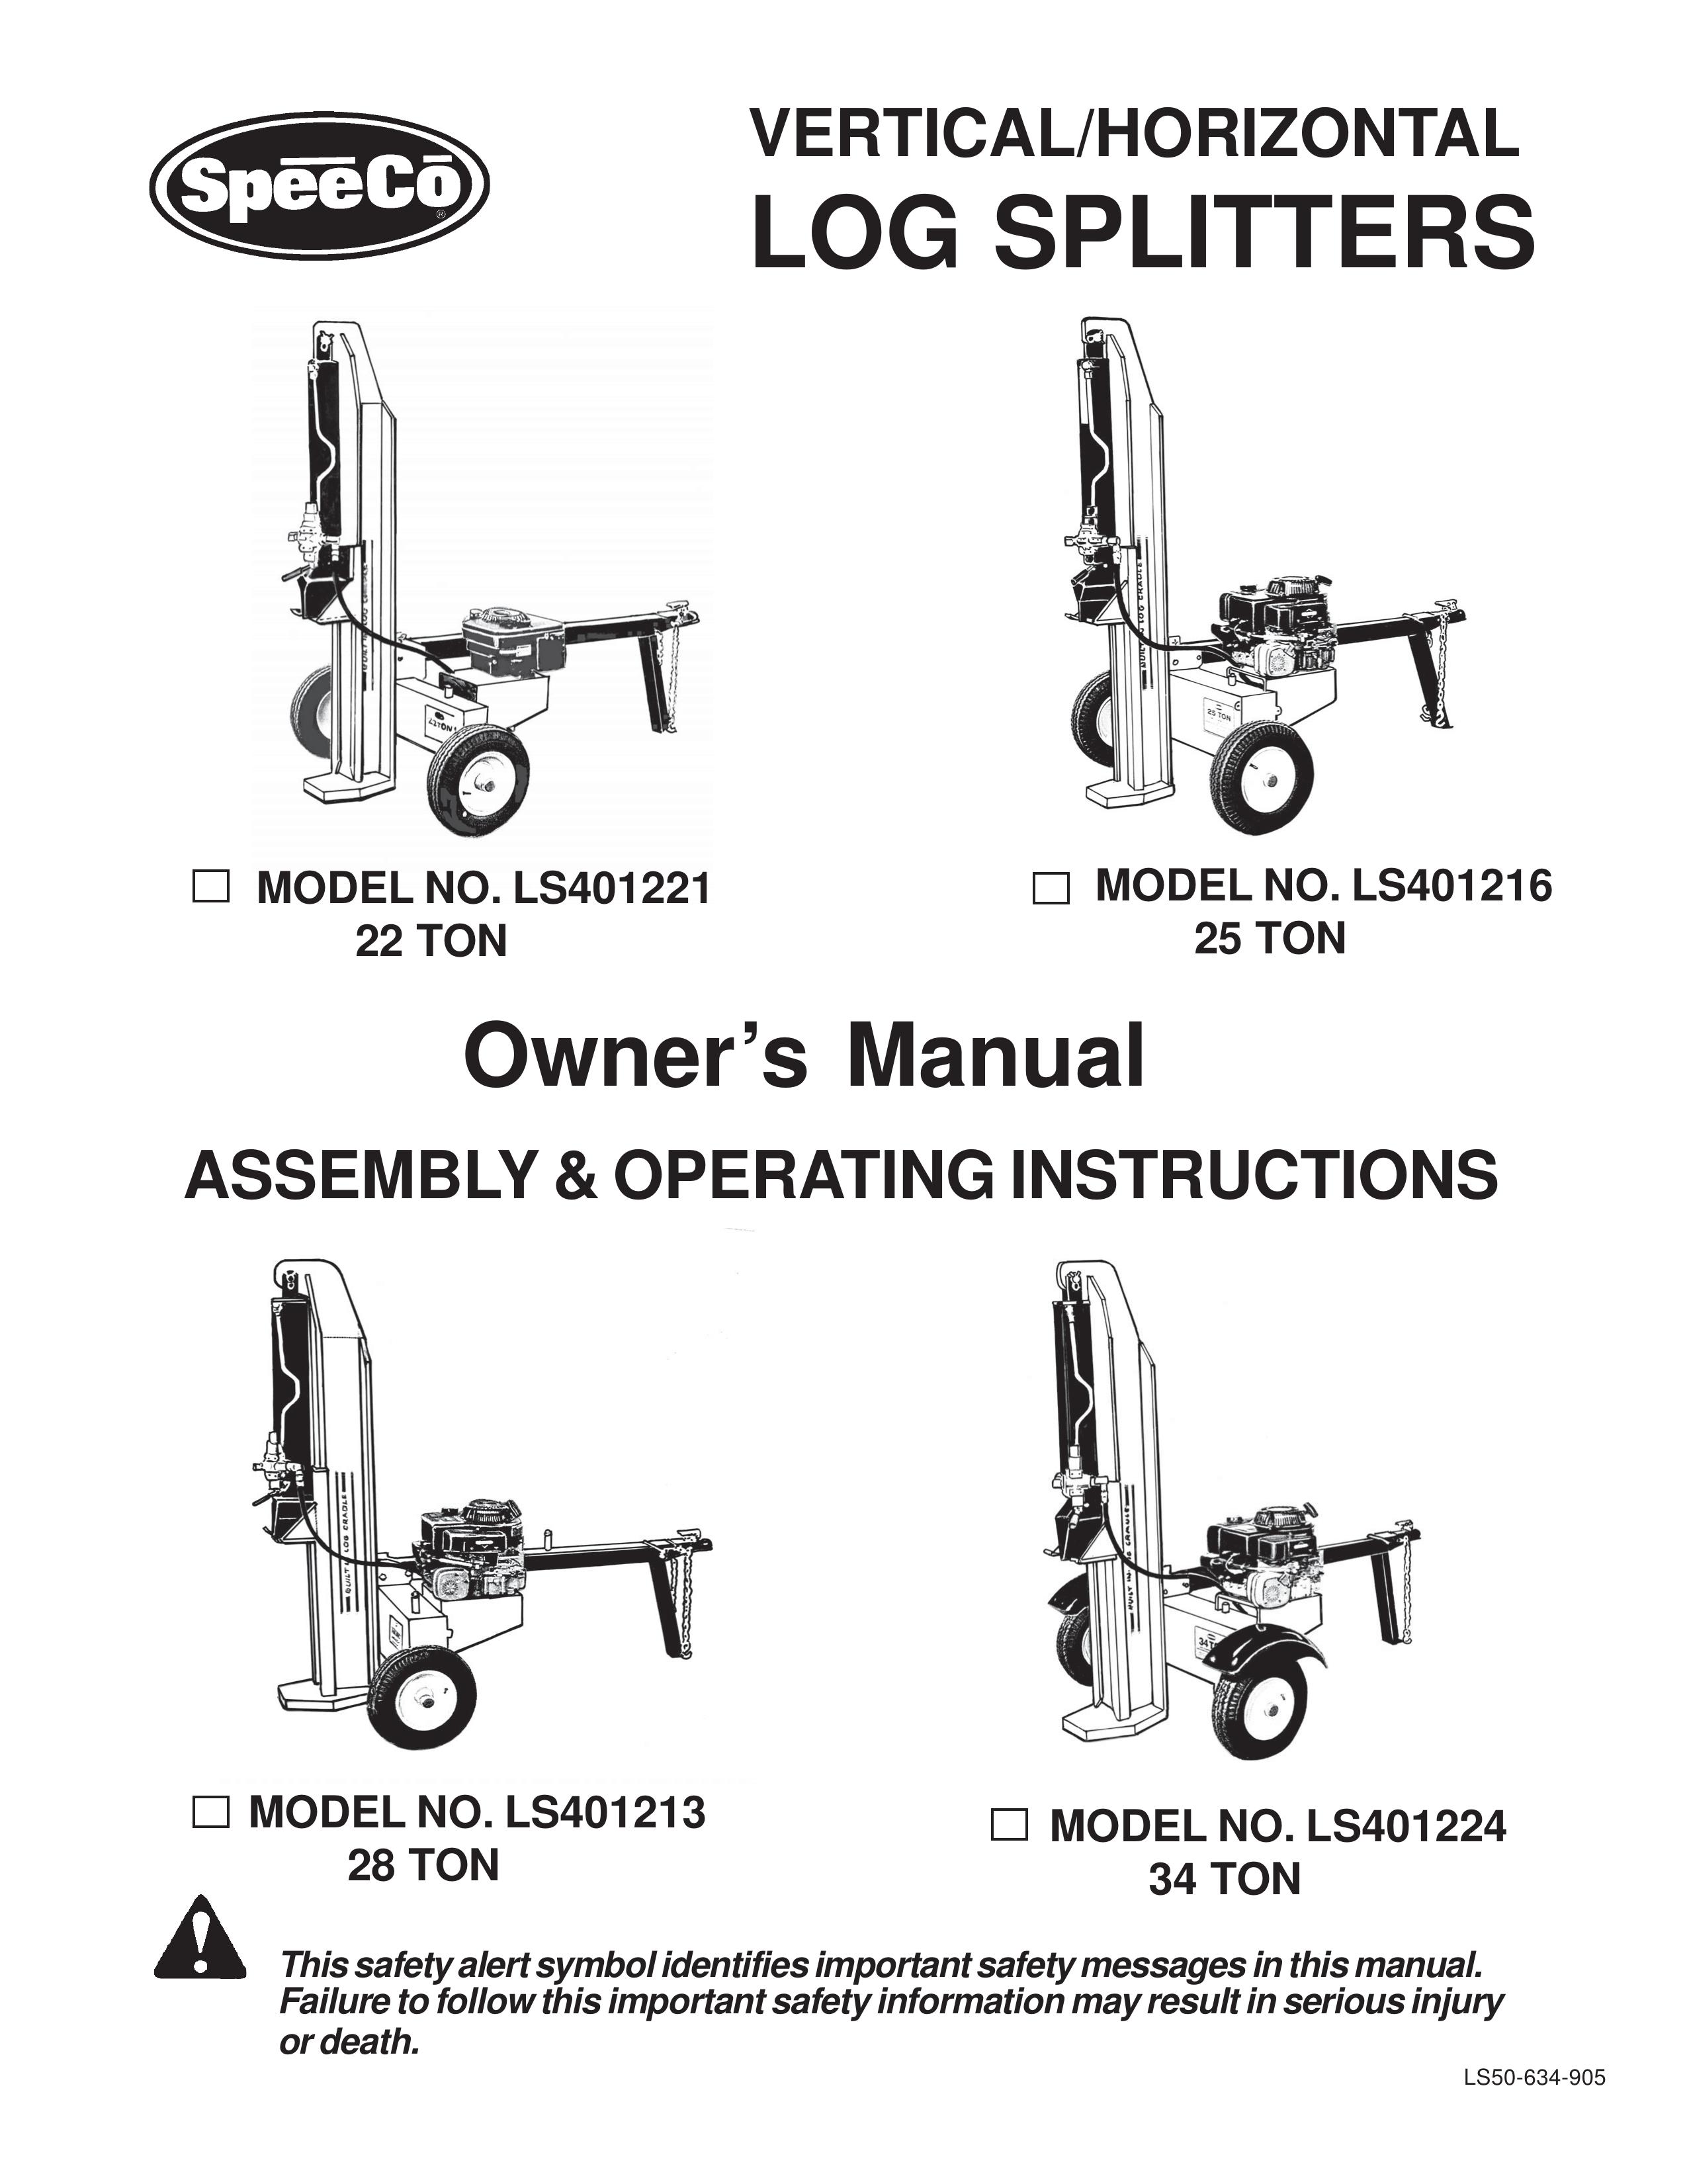 Briggs & Stratton LS401216 Log Splitter User Manual